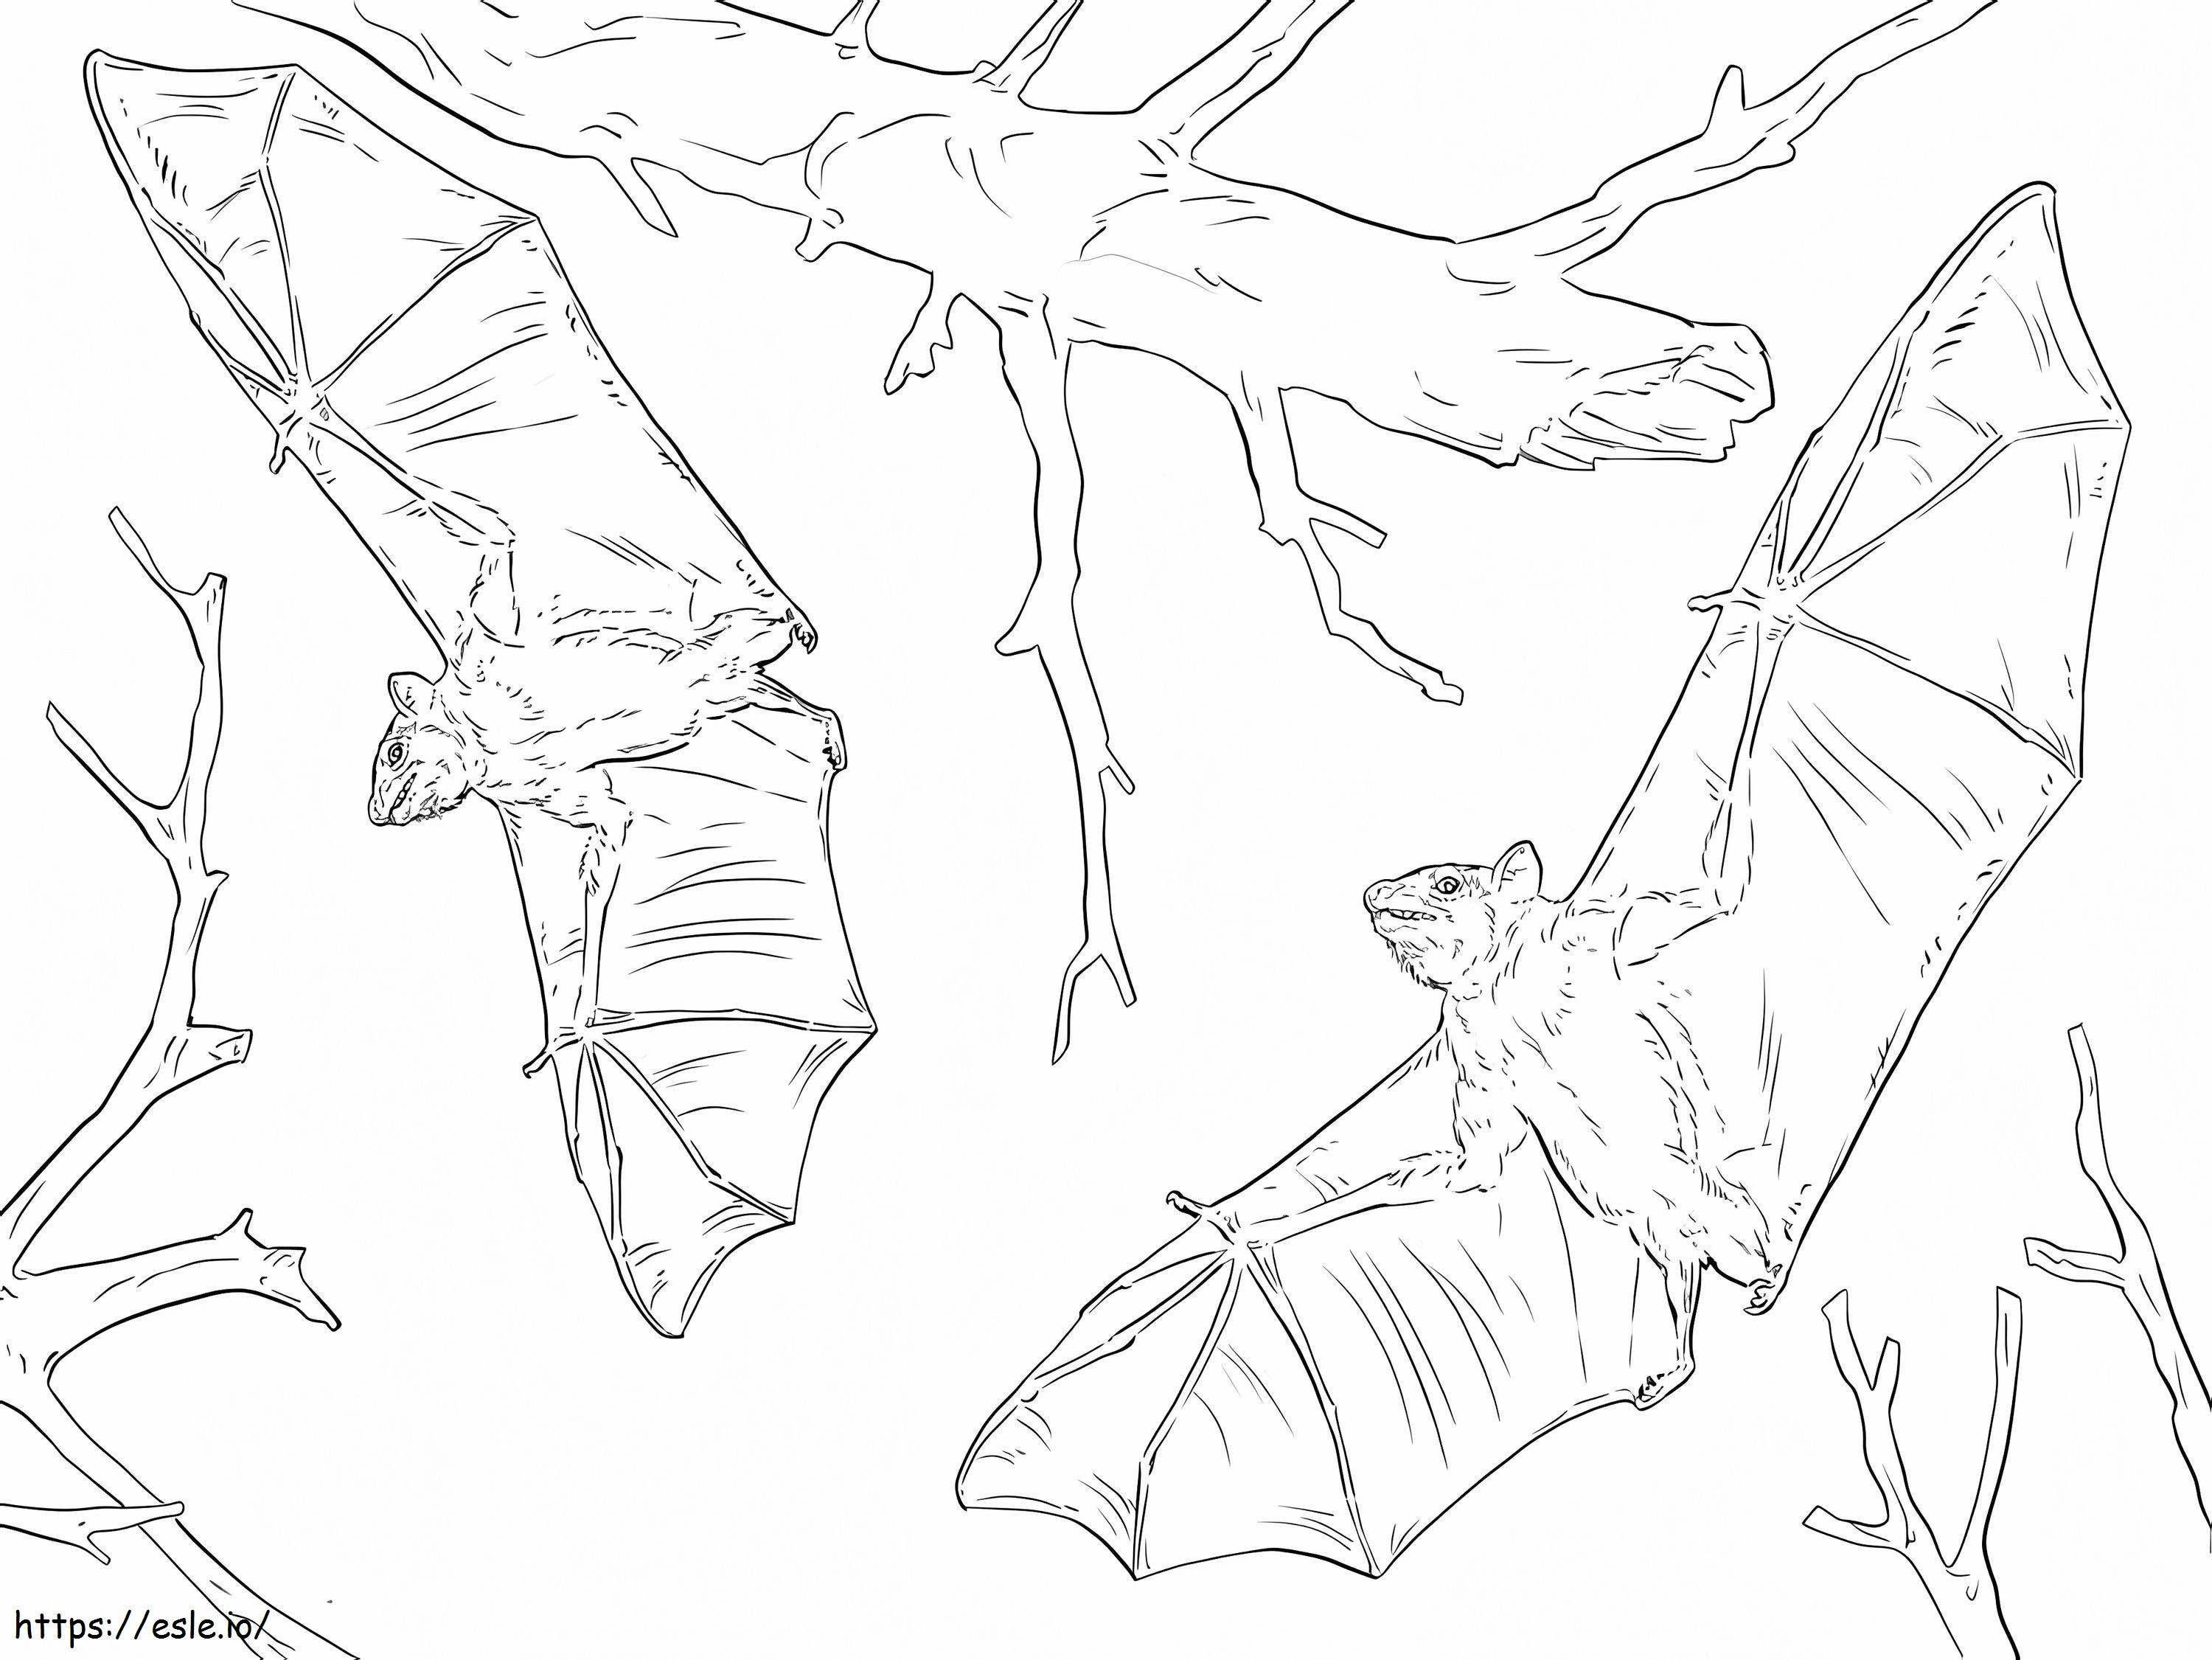 Common Fruit Bats coloring page